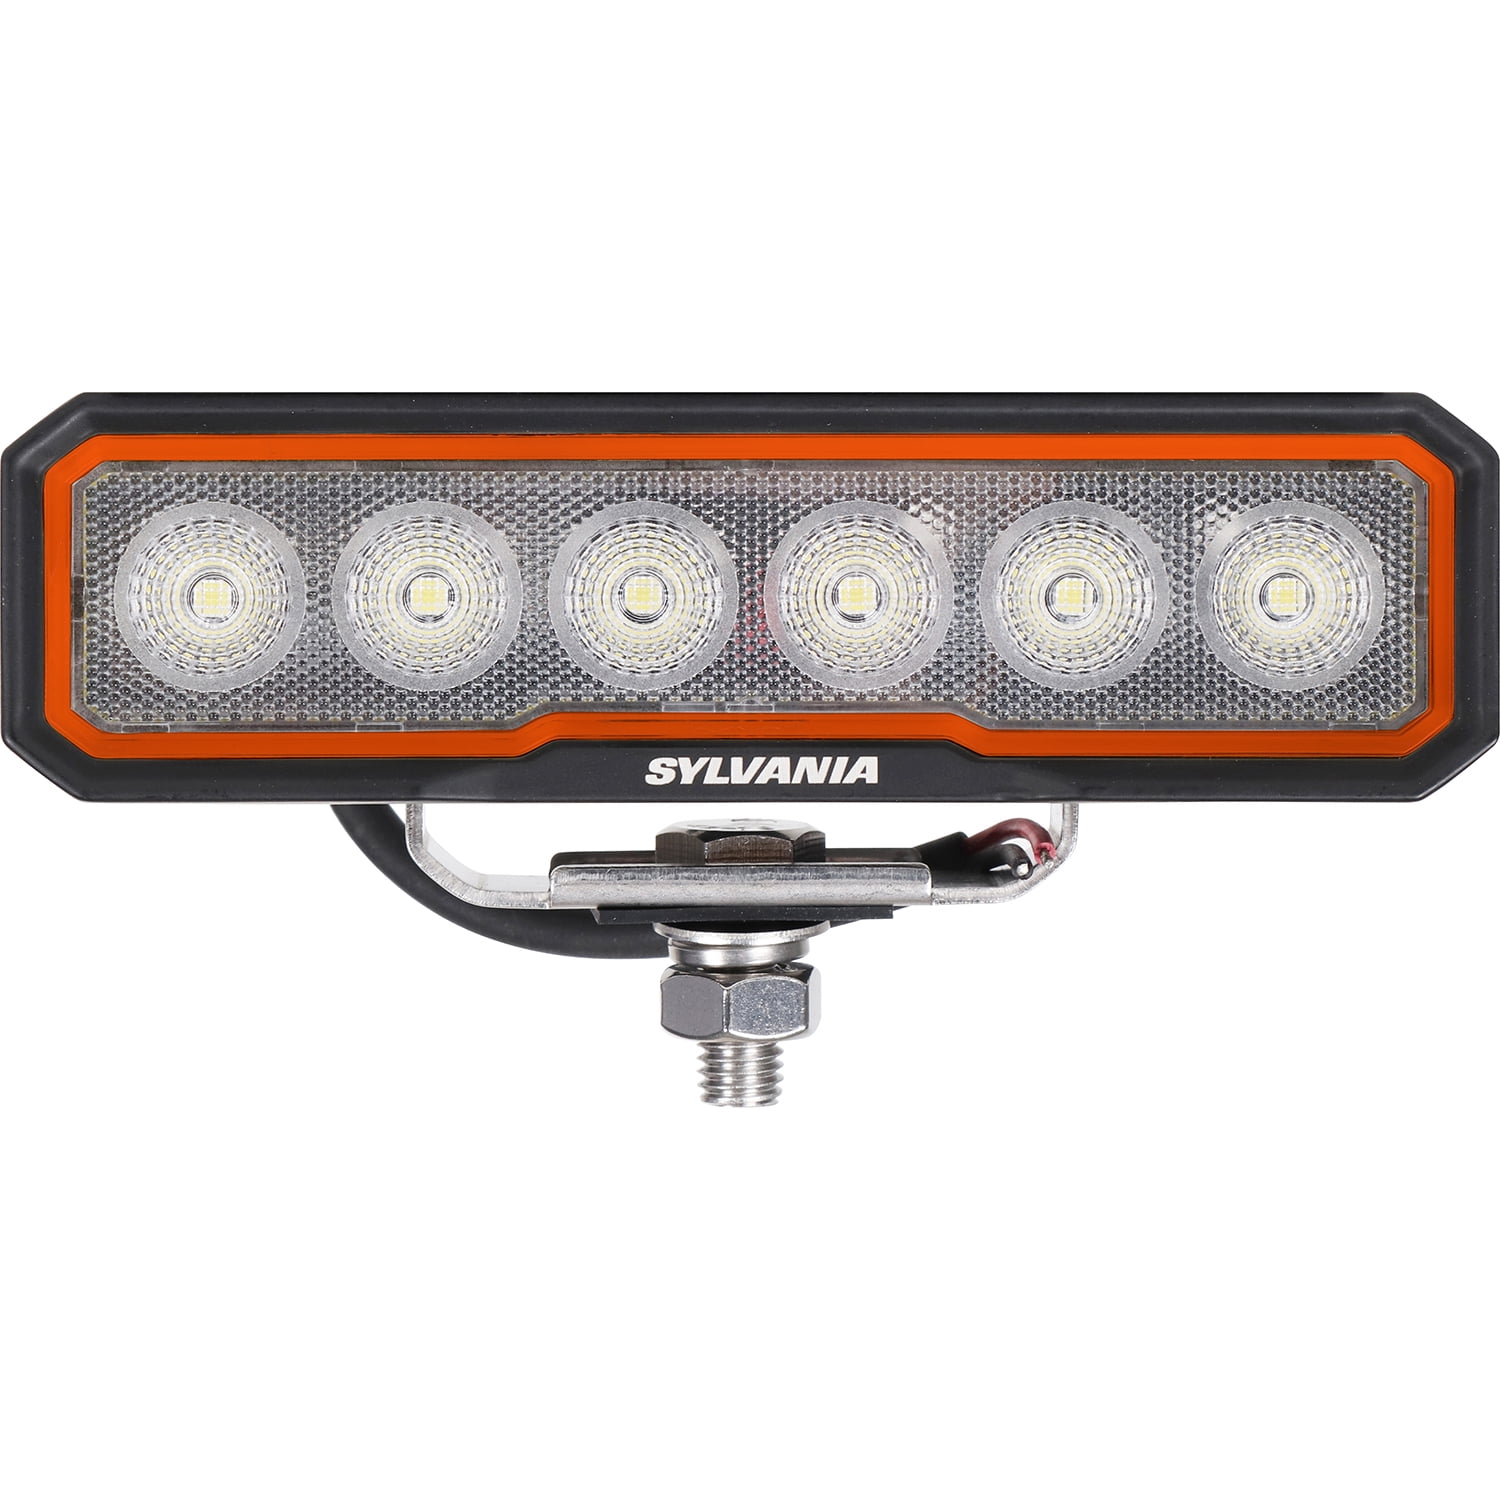 SYLVANIA Dual Mode 6 Inch LED Light Bar - Spot